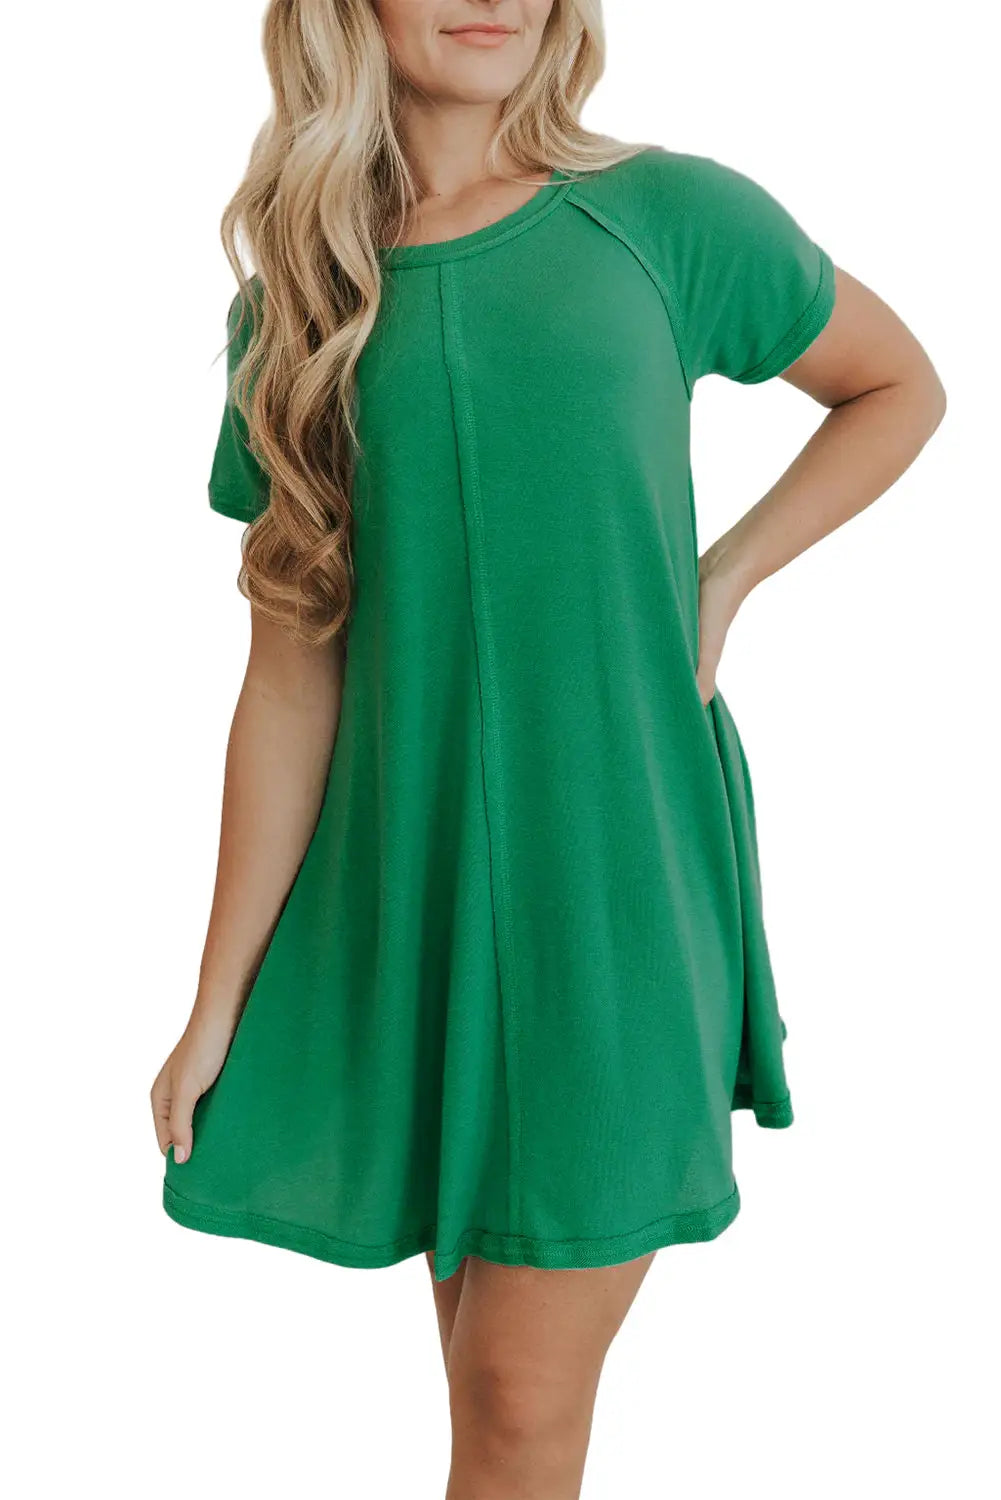 Bright green exposed seam t-shirt dress - t shirt dresses